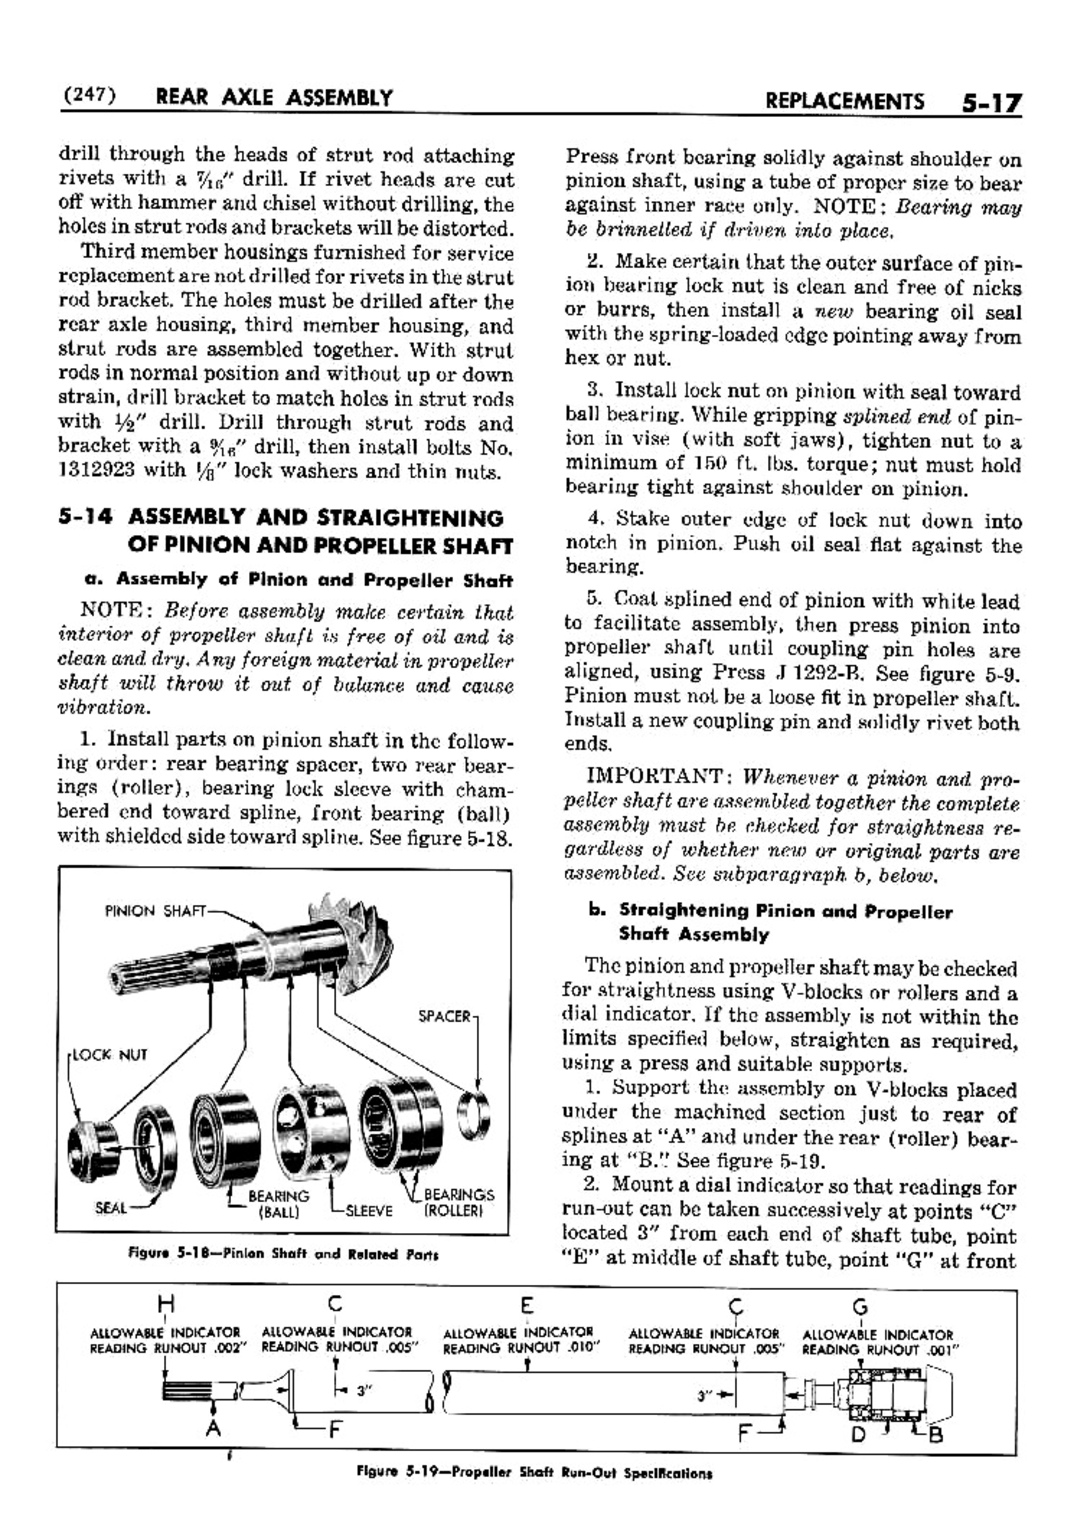 n_06 1952 Buick Shop Manual - Rear Axle-017-017.jpg